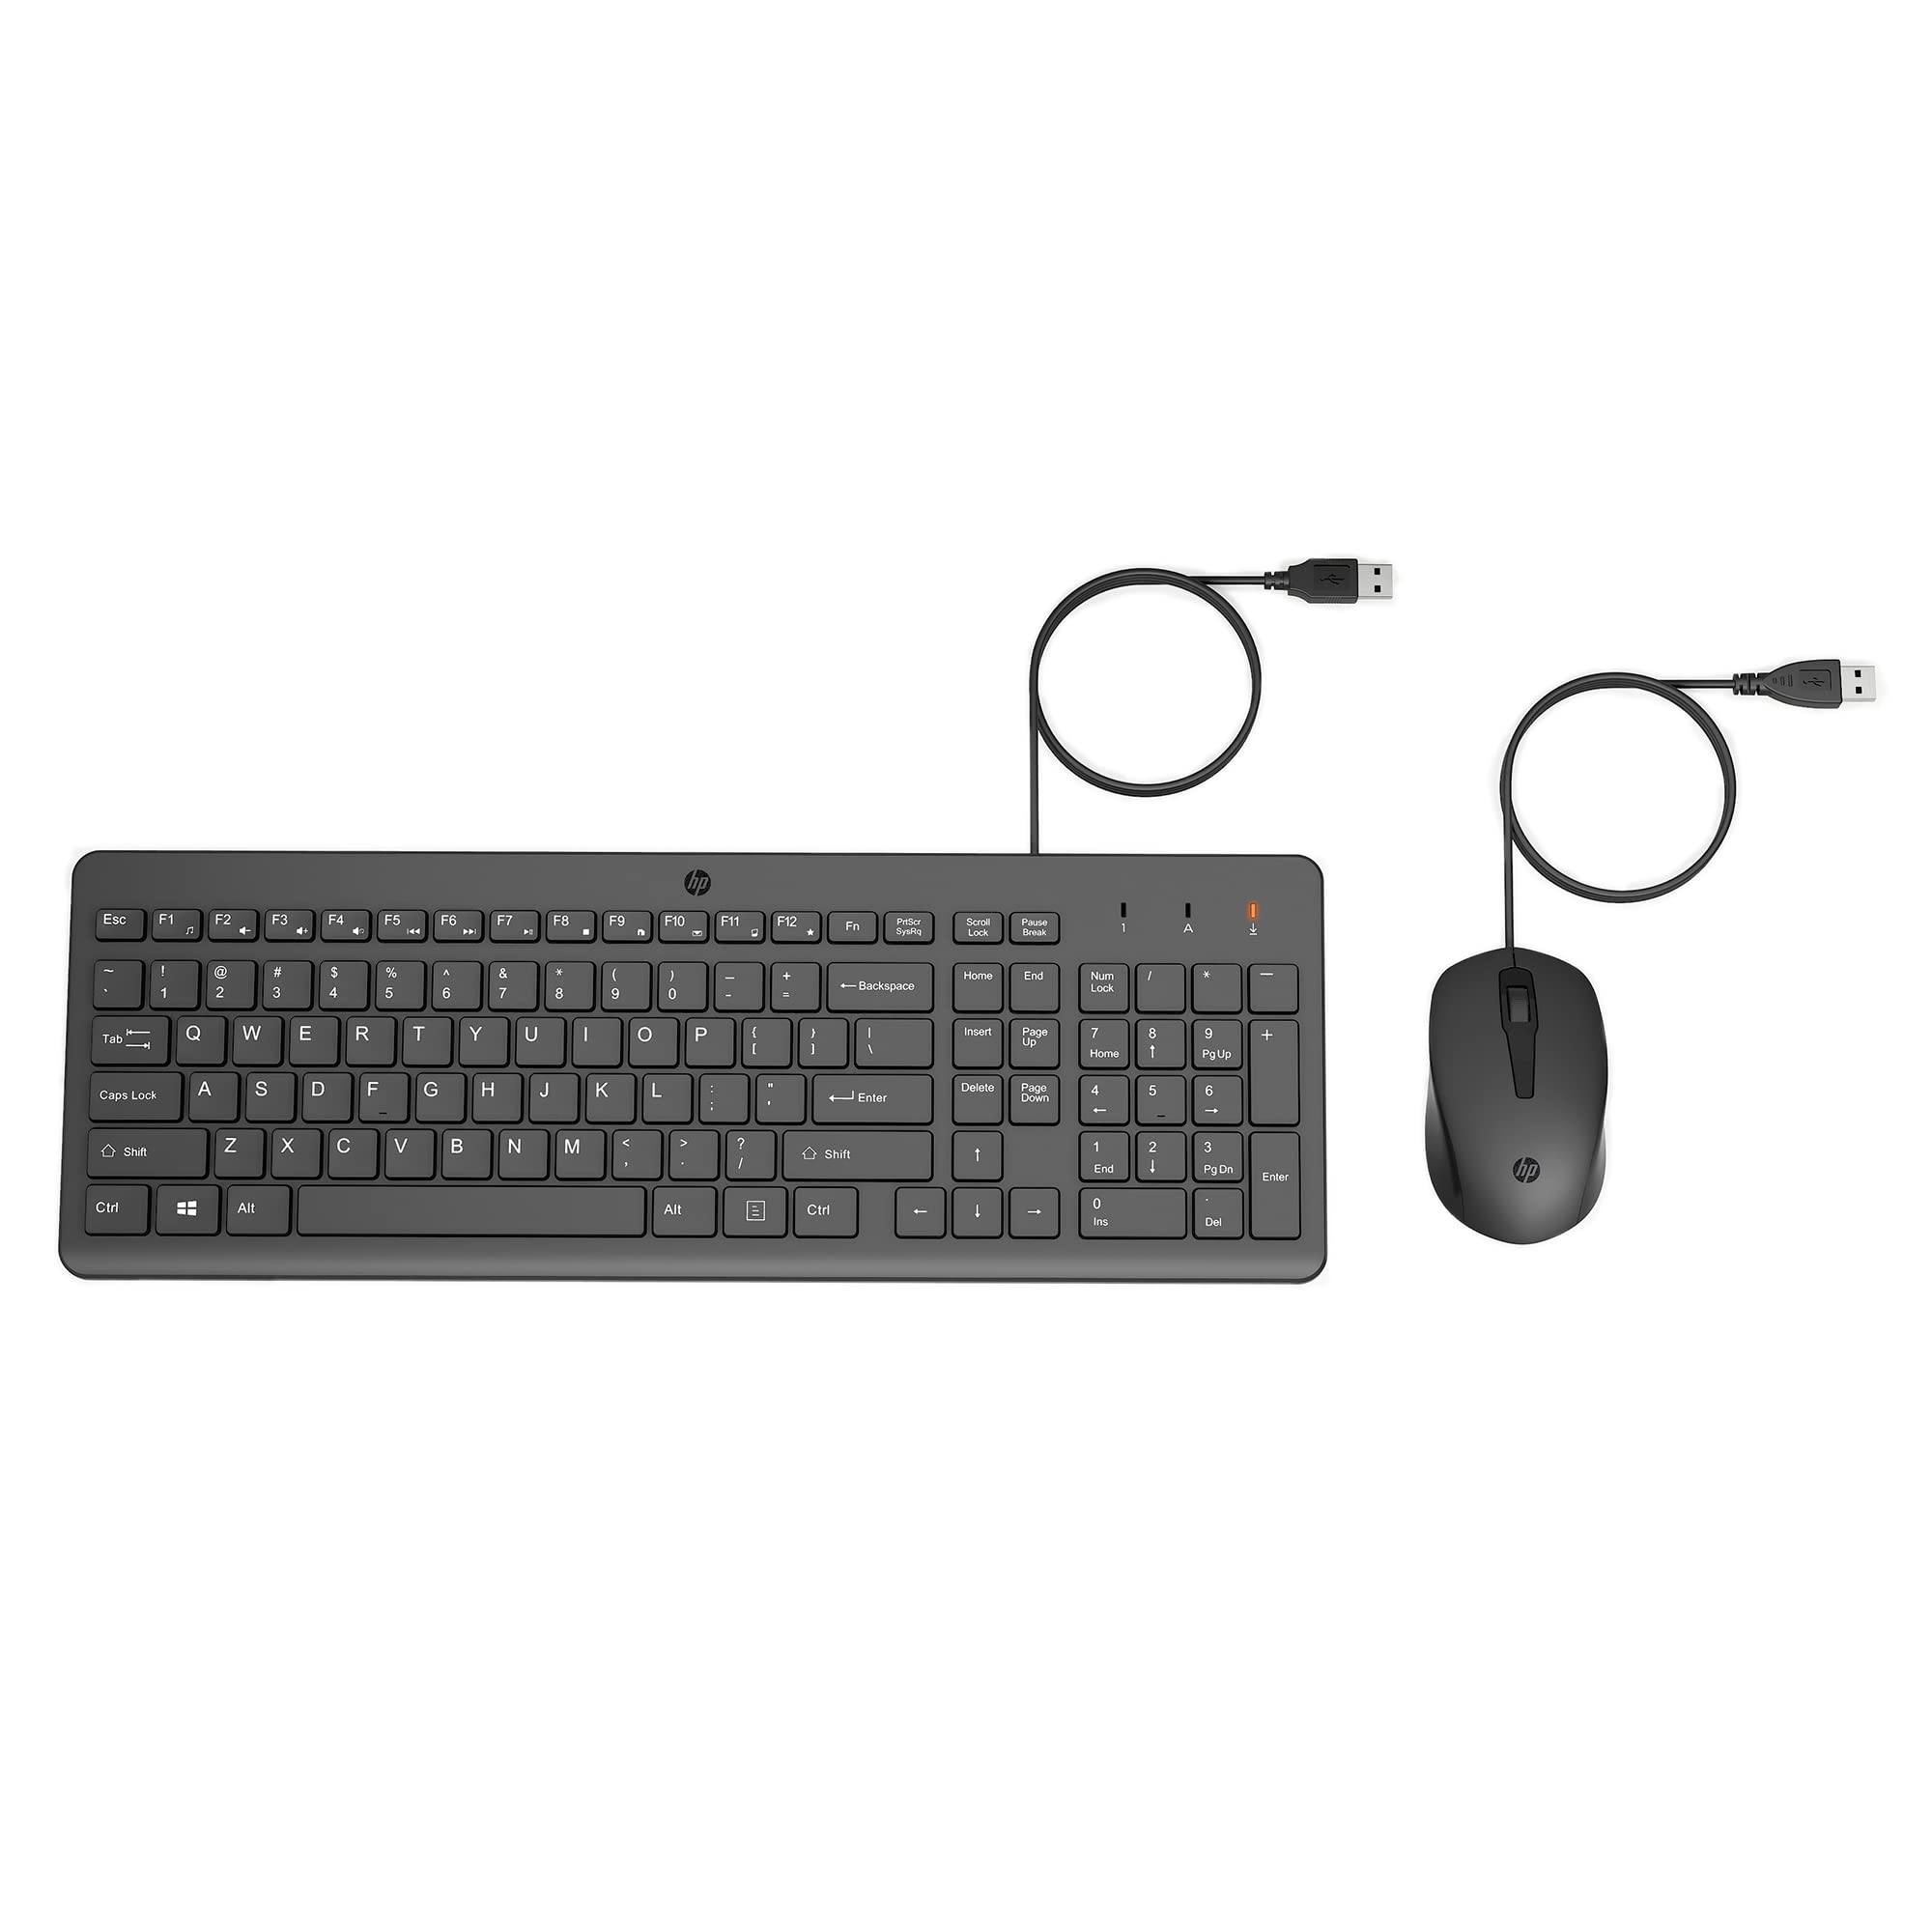 HP laptop keyboard with missing scroll lock key